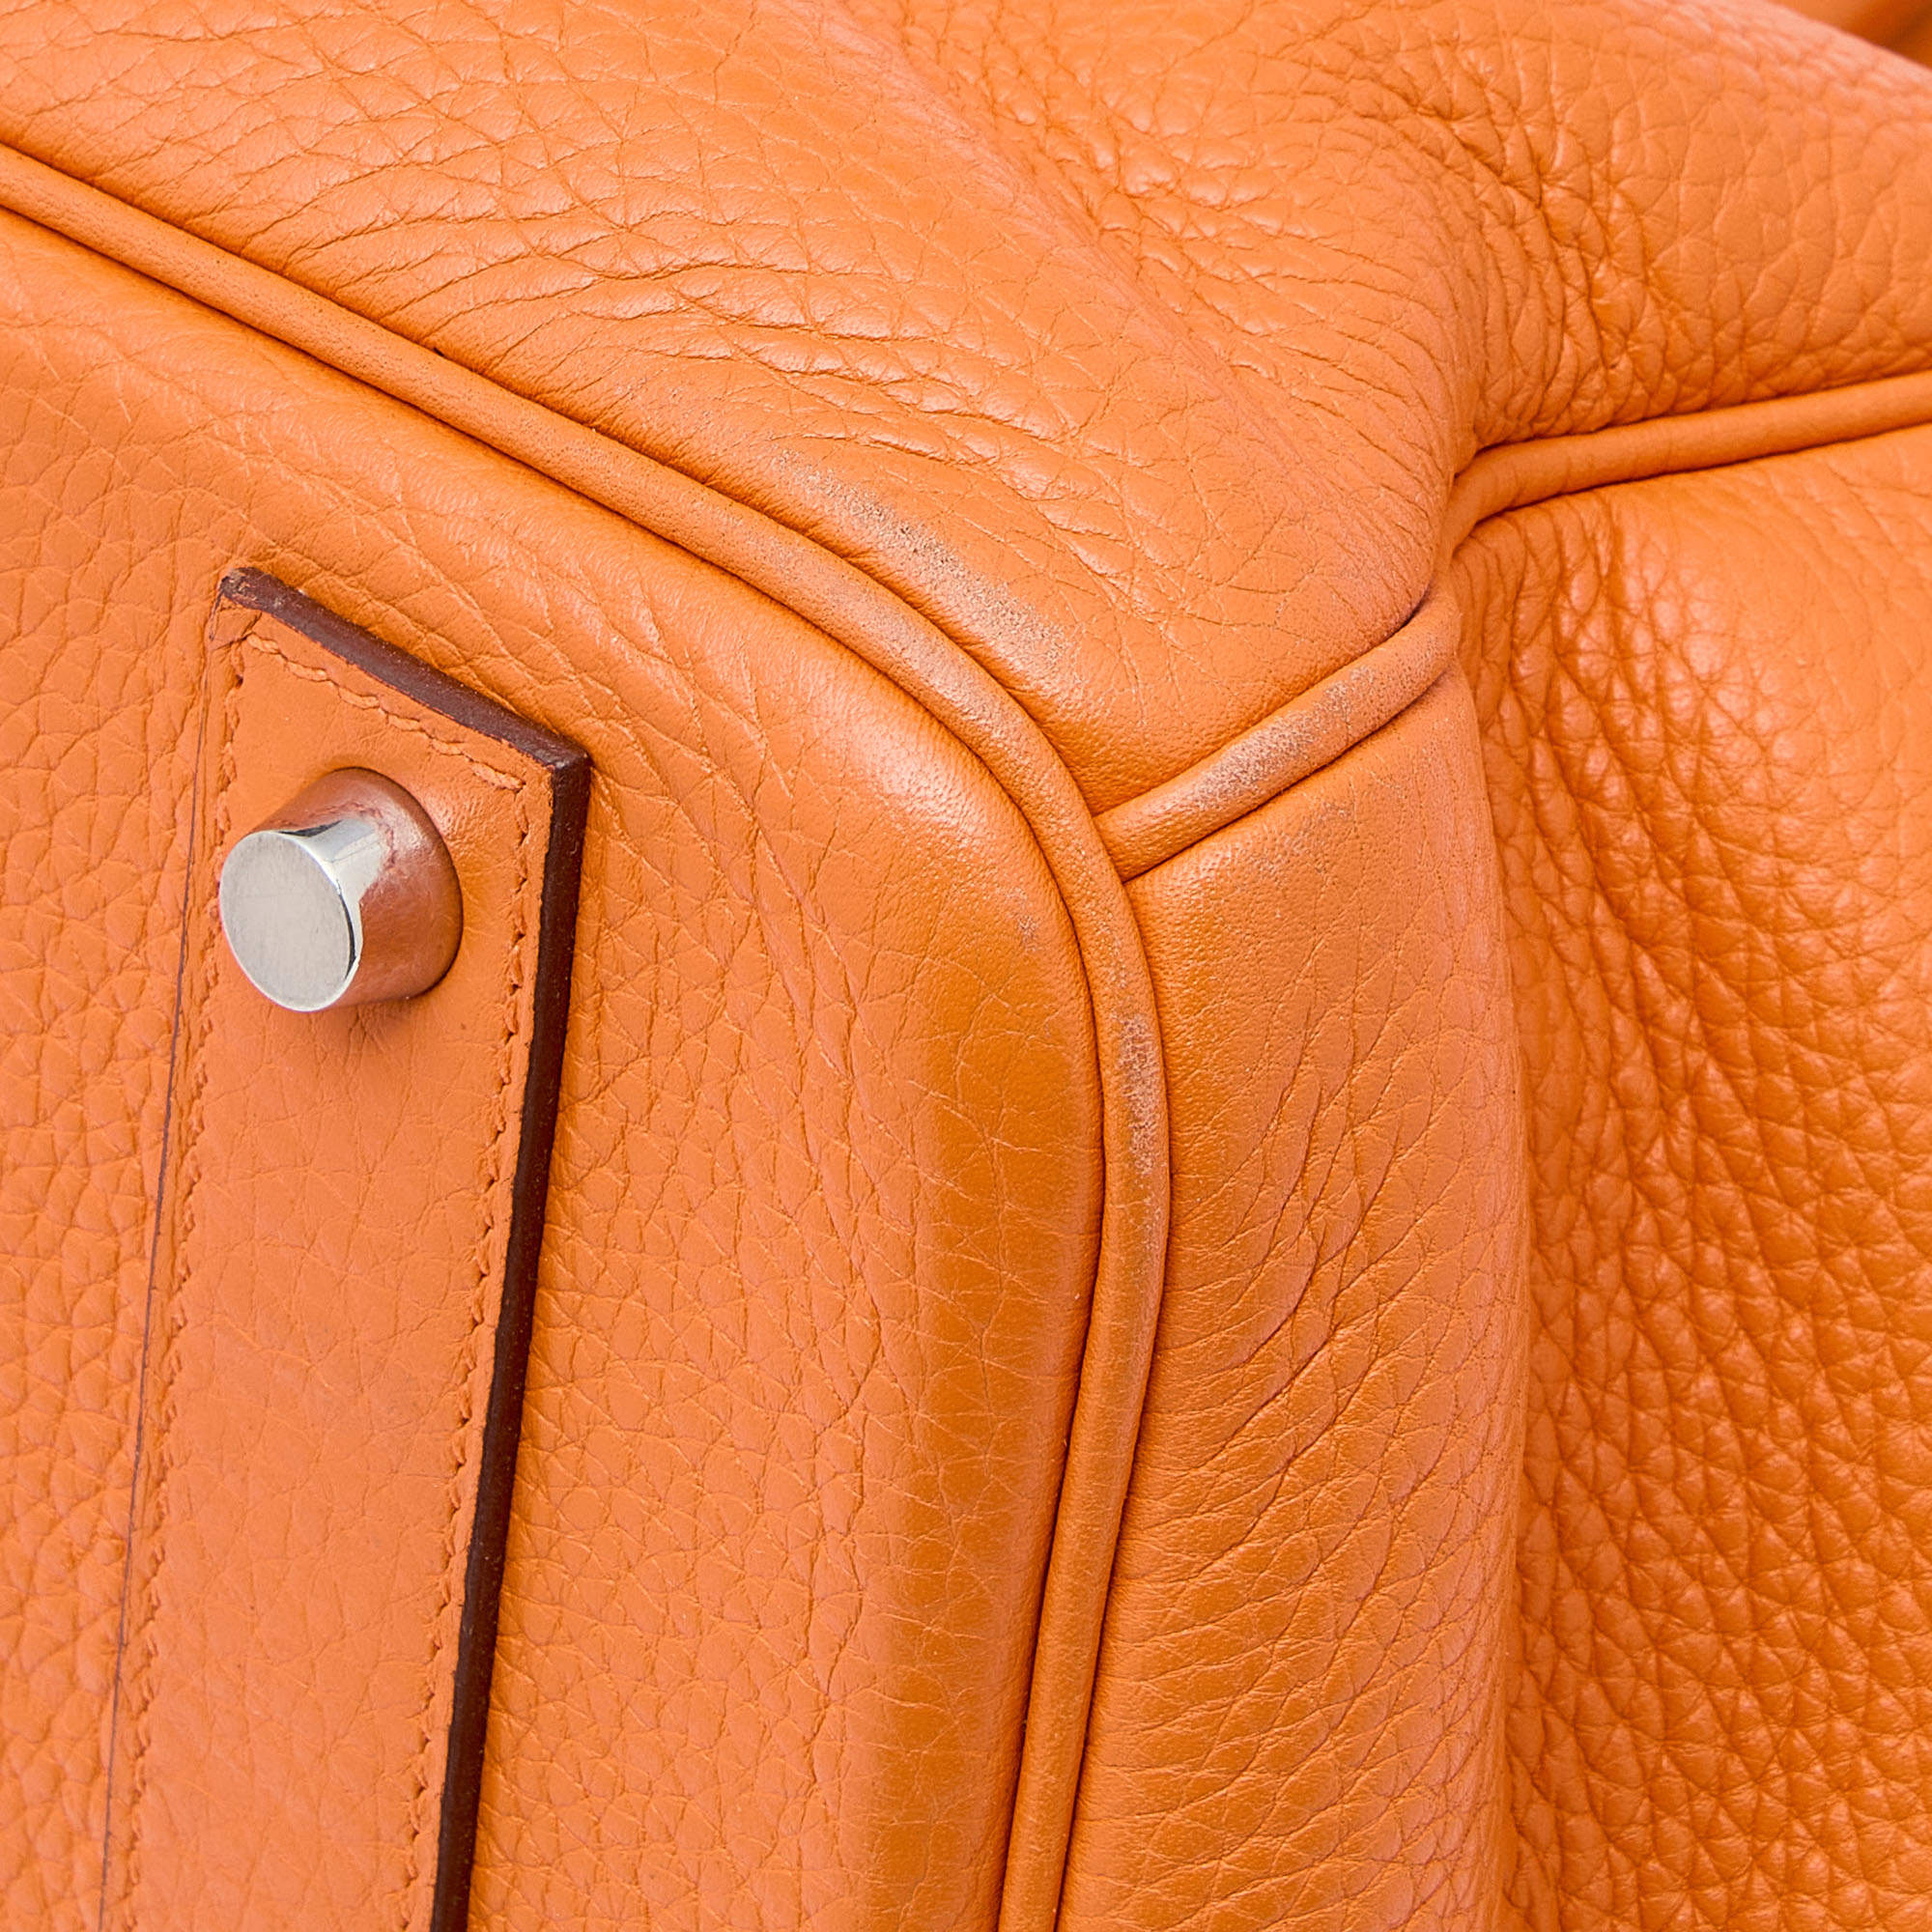 Hermes 40cm Orange H Togo Leather Birkin Bag with Palladium, Lot #56200